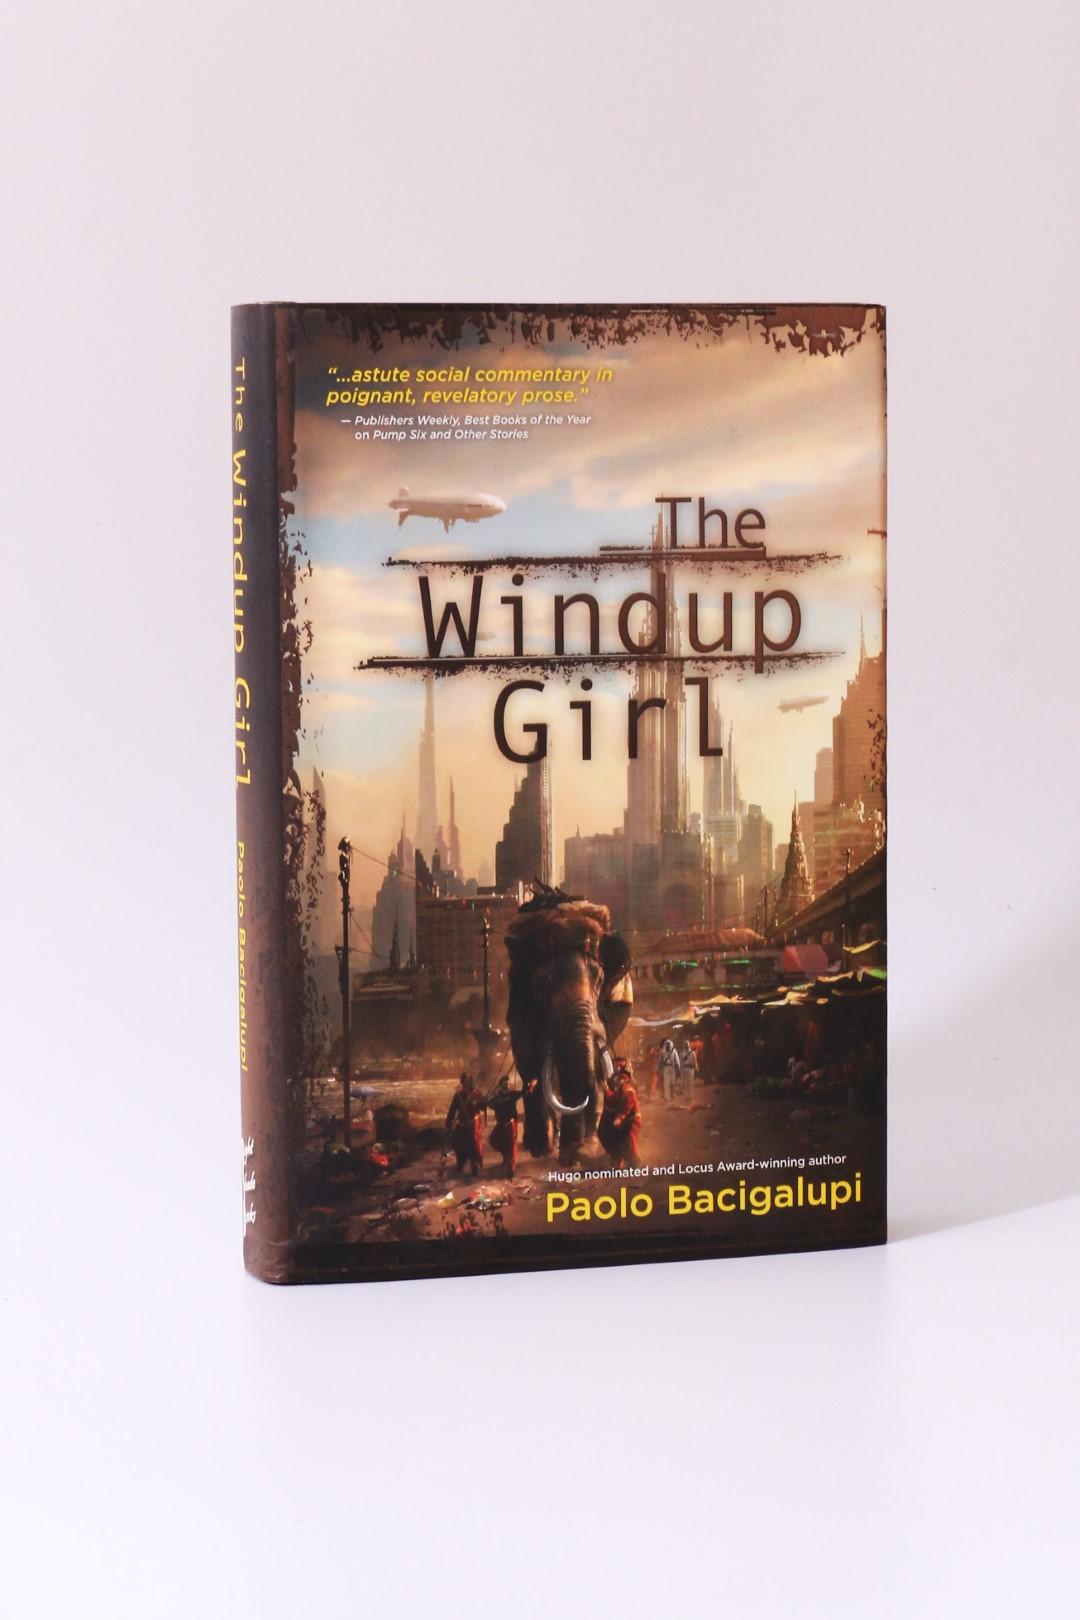 Paolo Bacigalupi - The Windup Girl - Night Shade Books, 2009, First Edition.